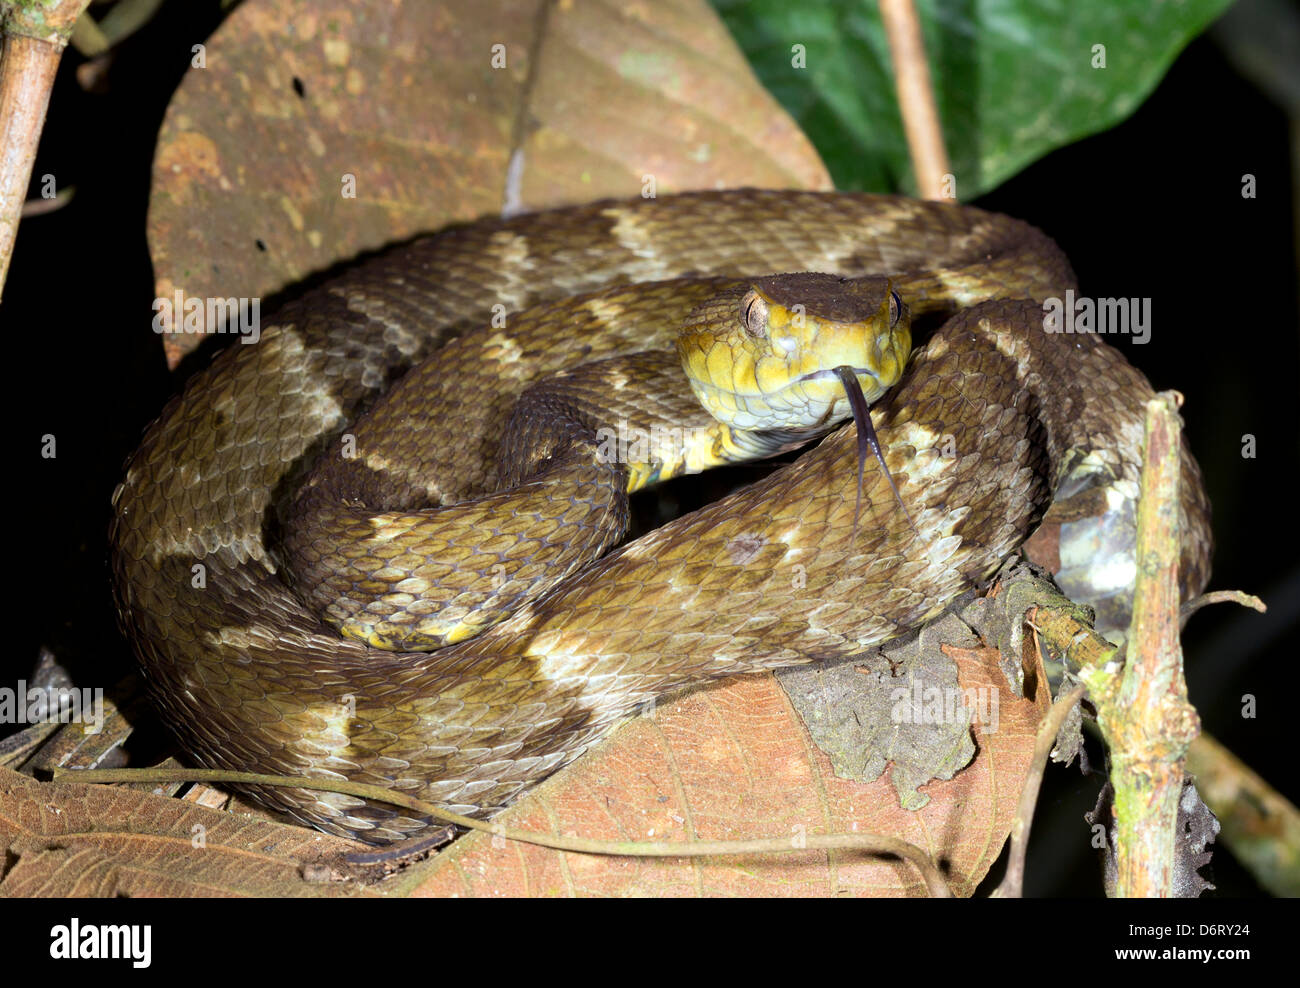 Fer de Lance (Bothrops atrox) a venomous viper coiled in the rainforest understory, Ecuador Stock Photo